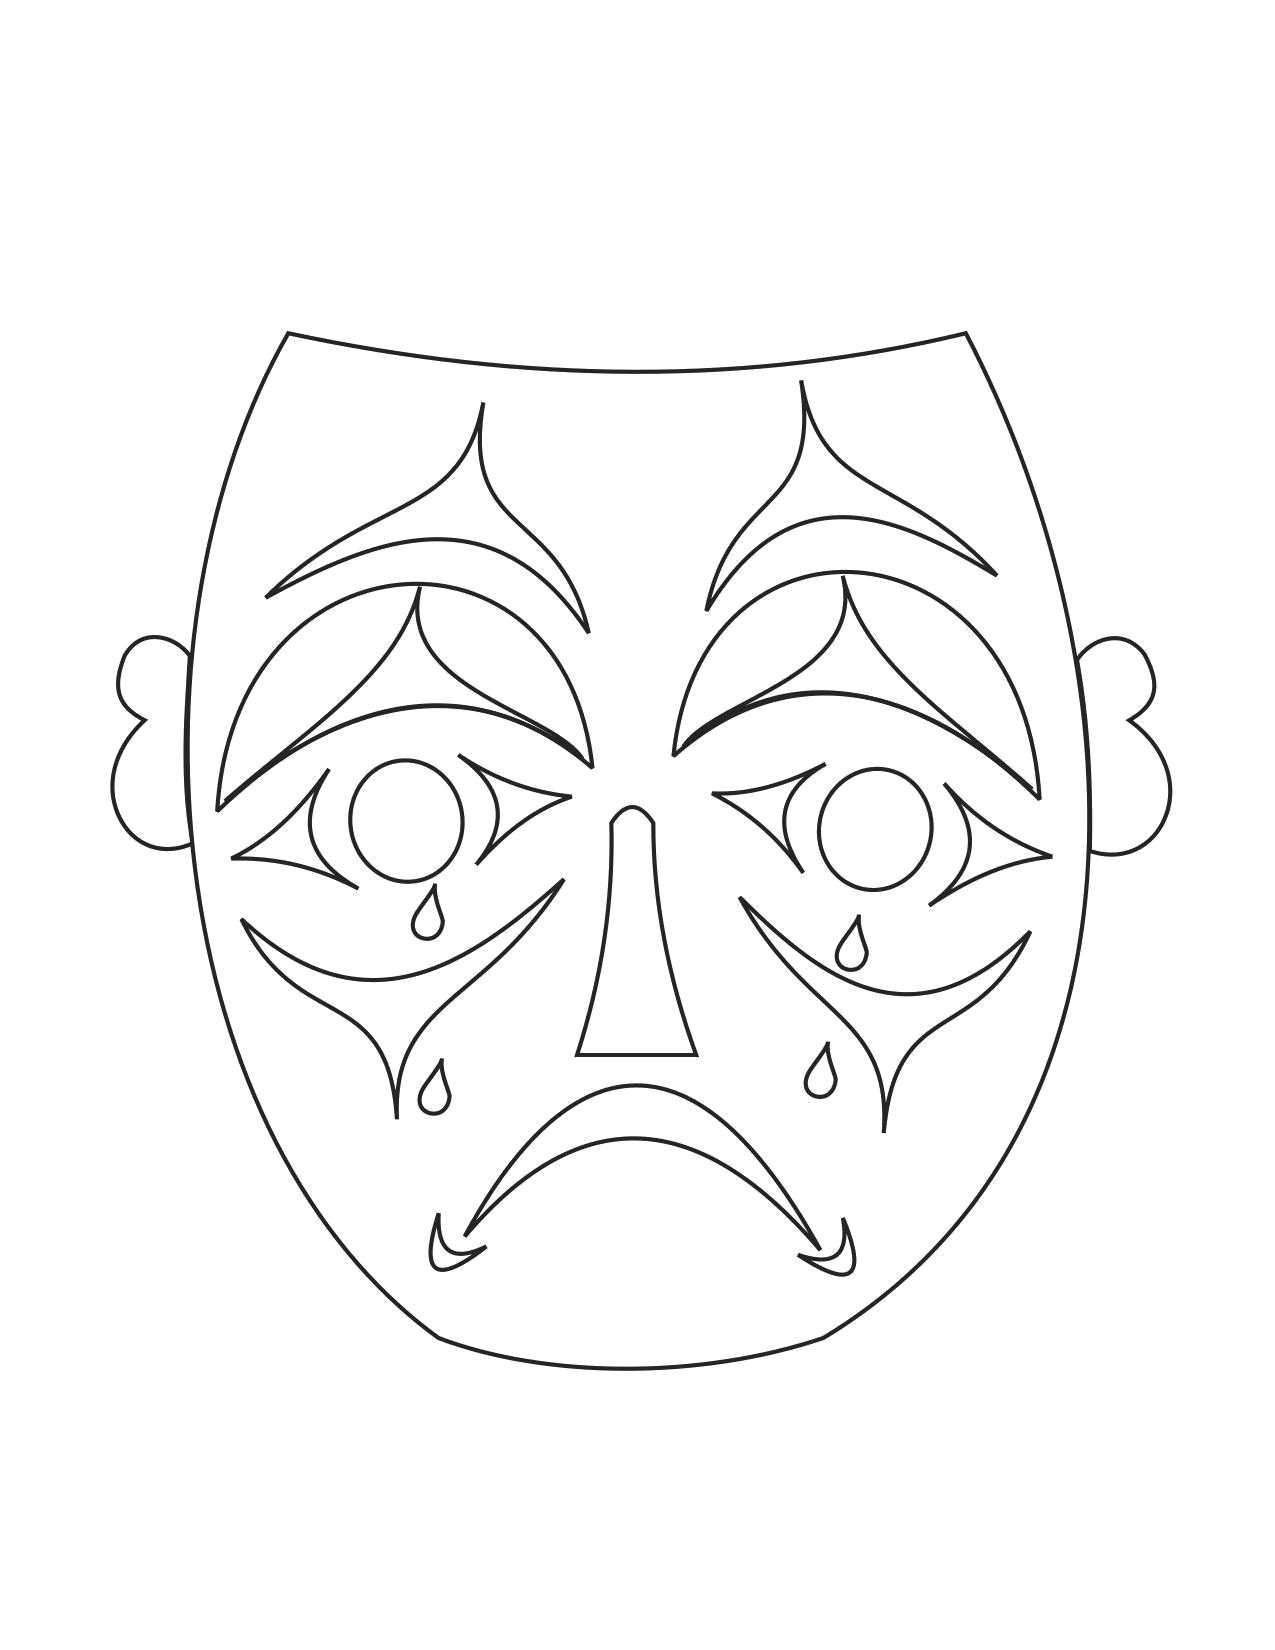 Название: Раскраска Грустная маска со слезами. Категория: Маски. Теги: маска.